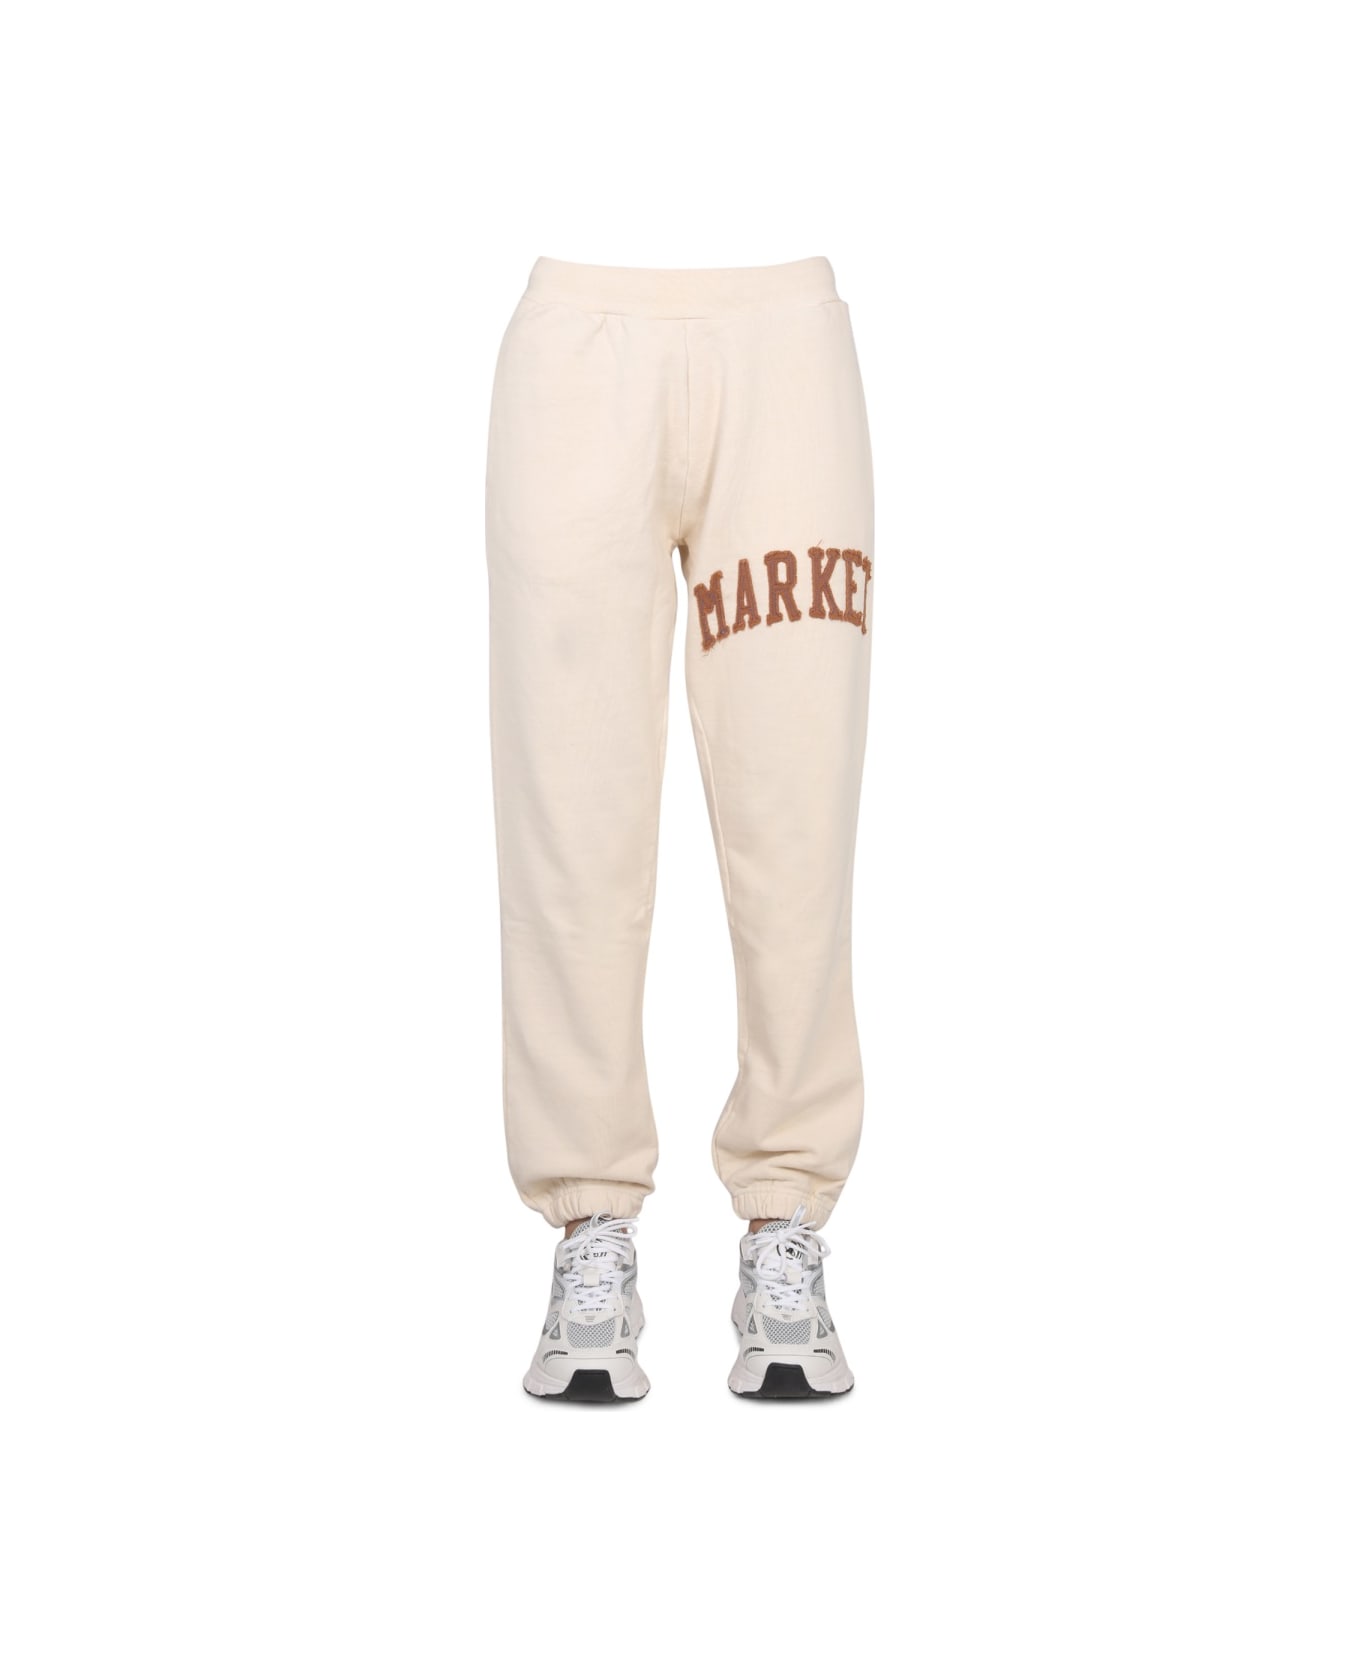 Market Pants With Applied Logo - BEIGE